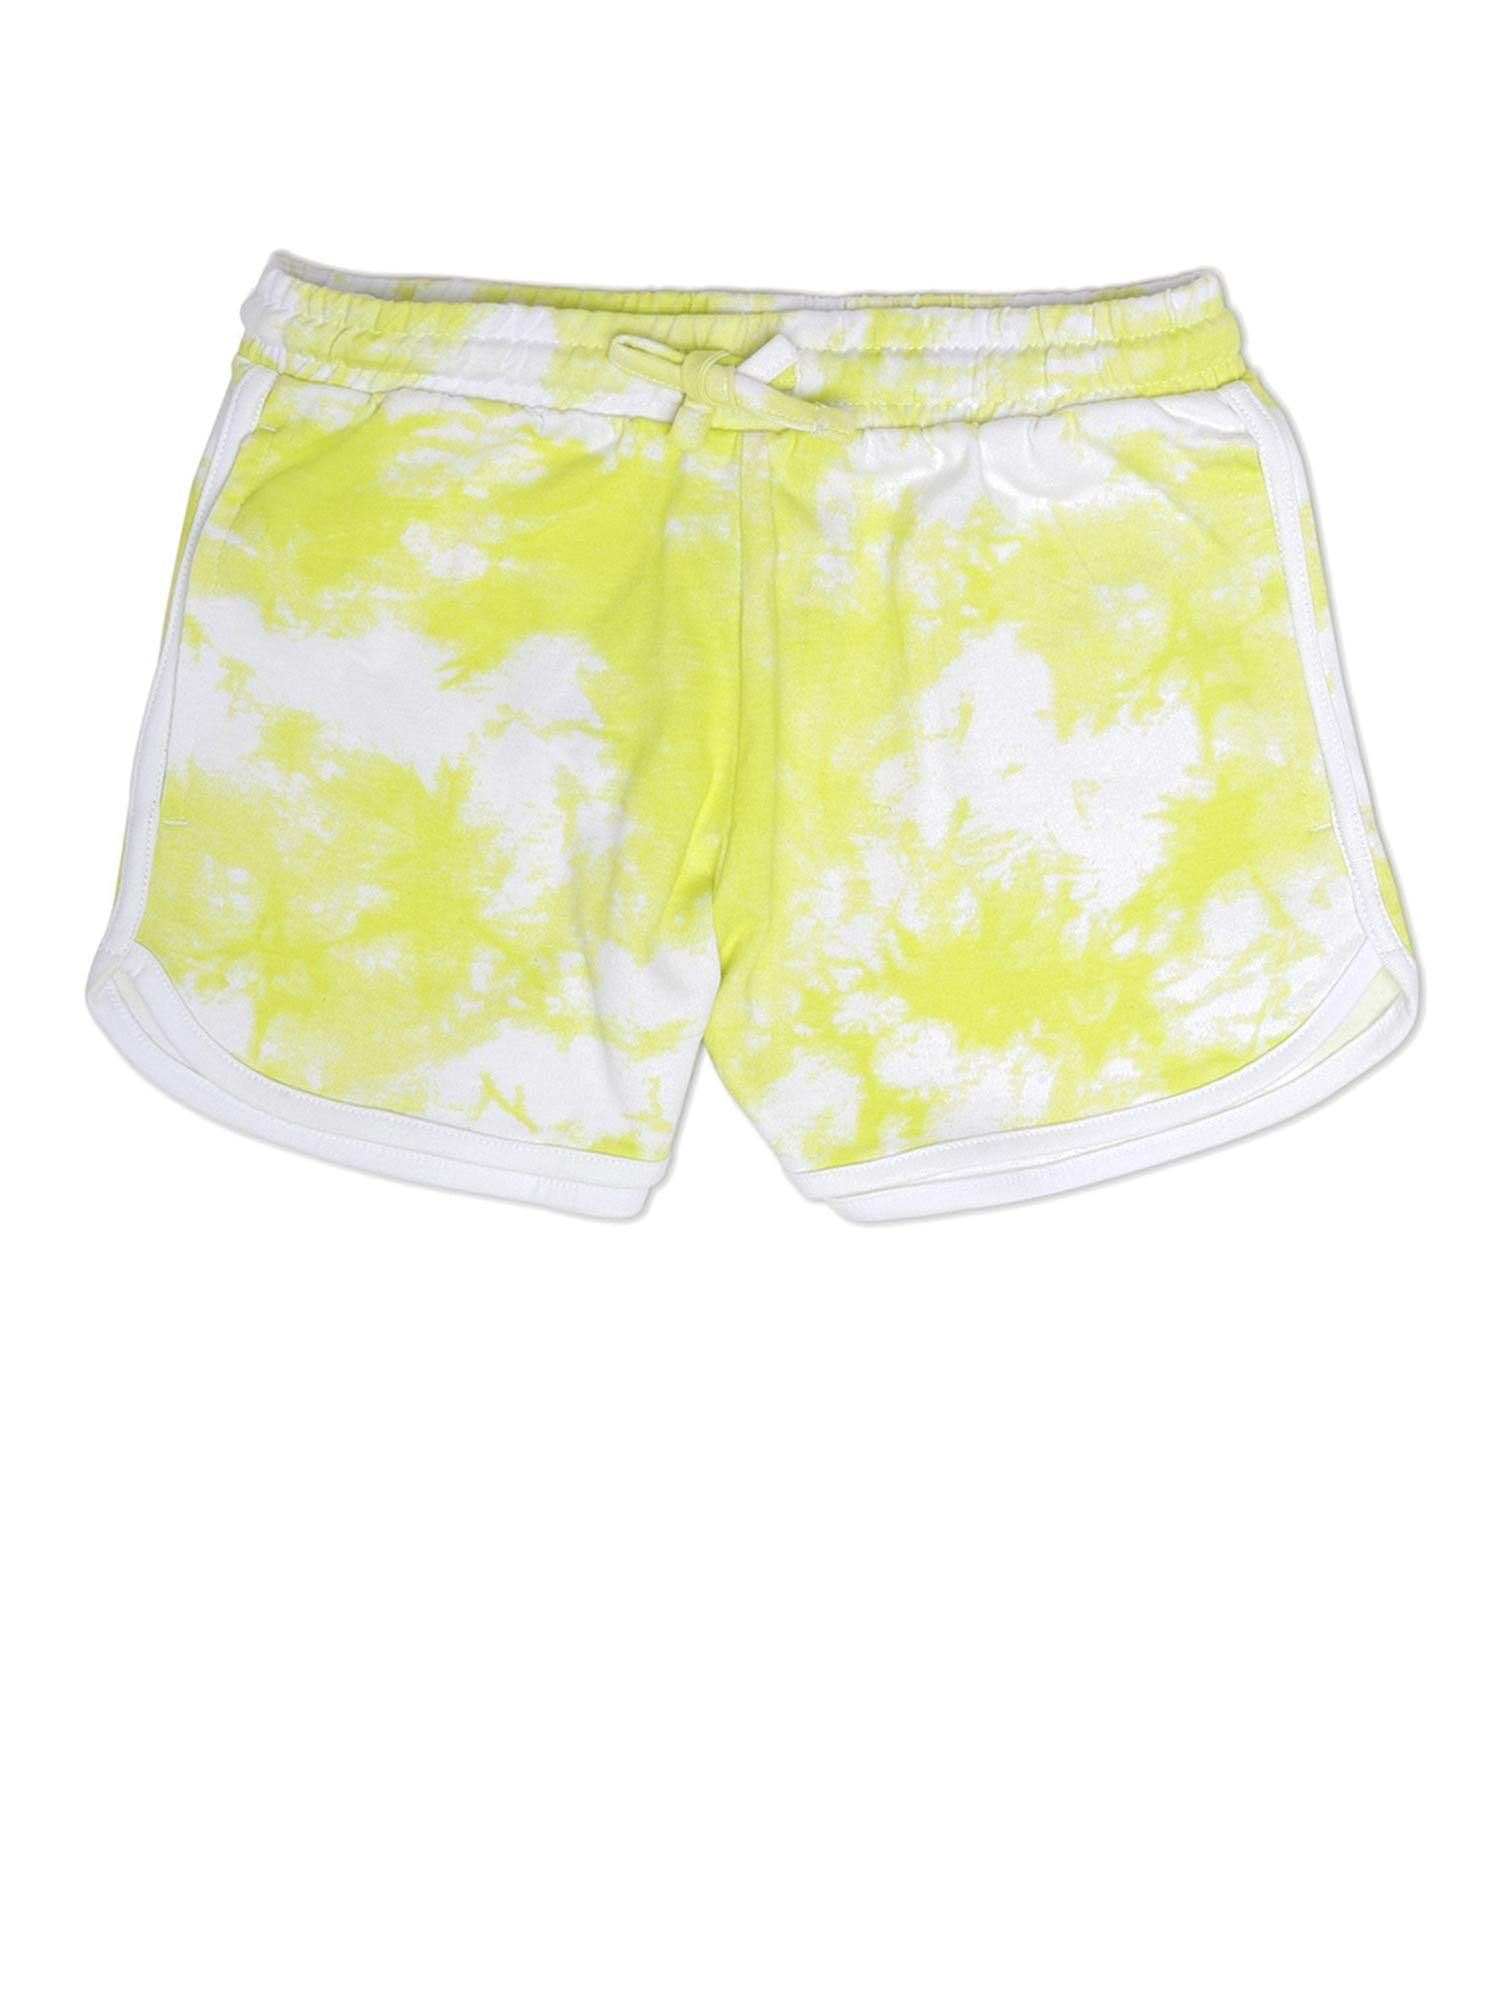 girls-yellow-printed-shorts